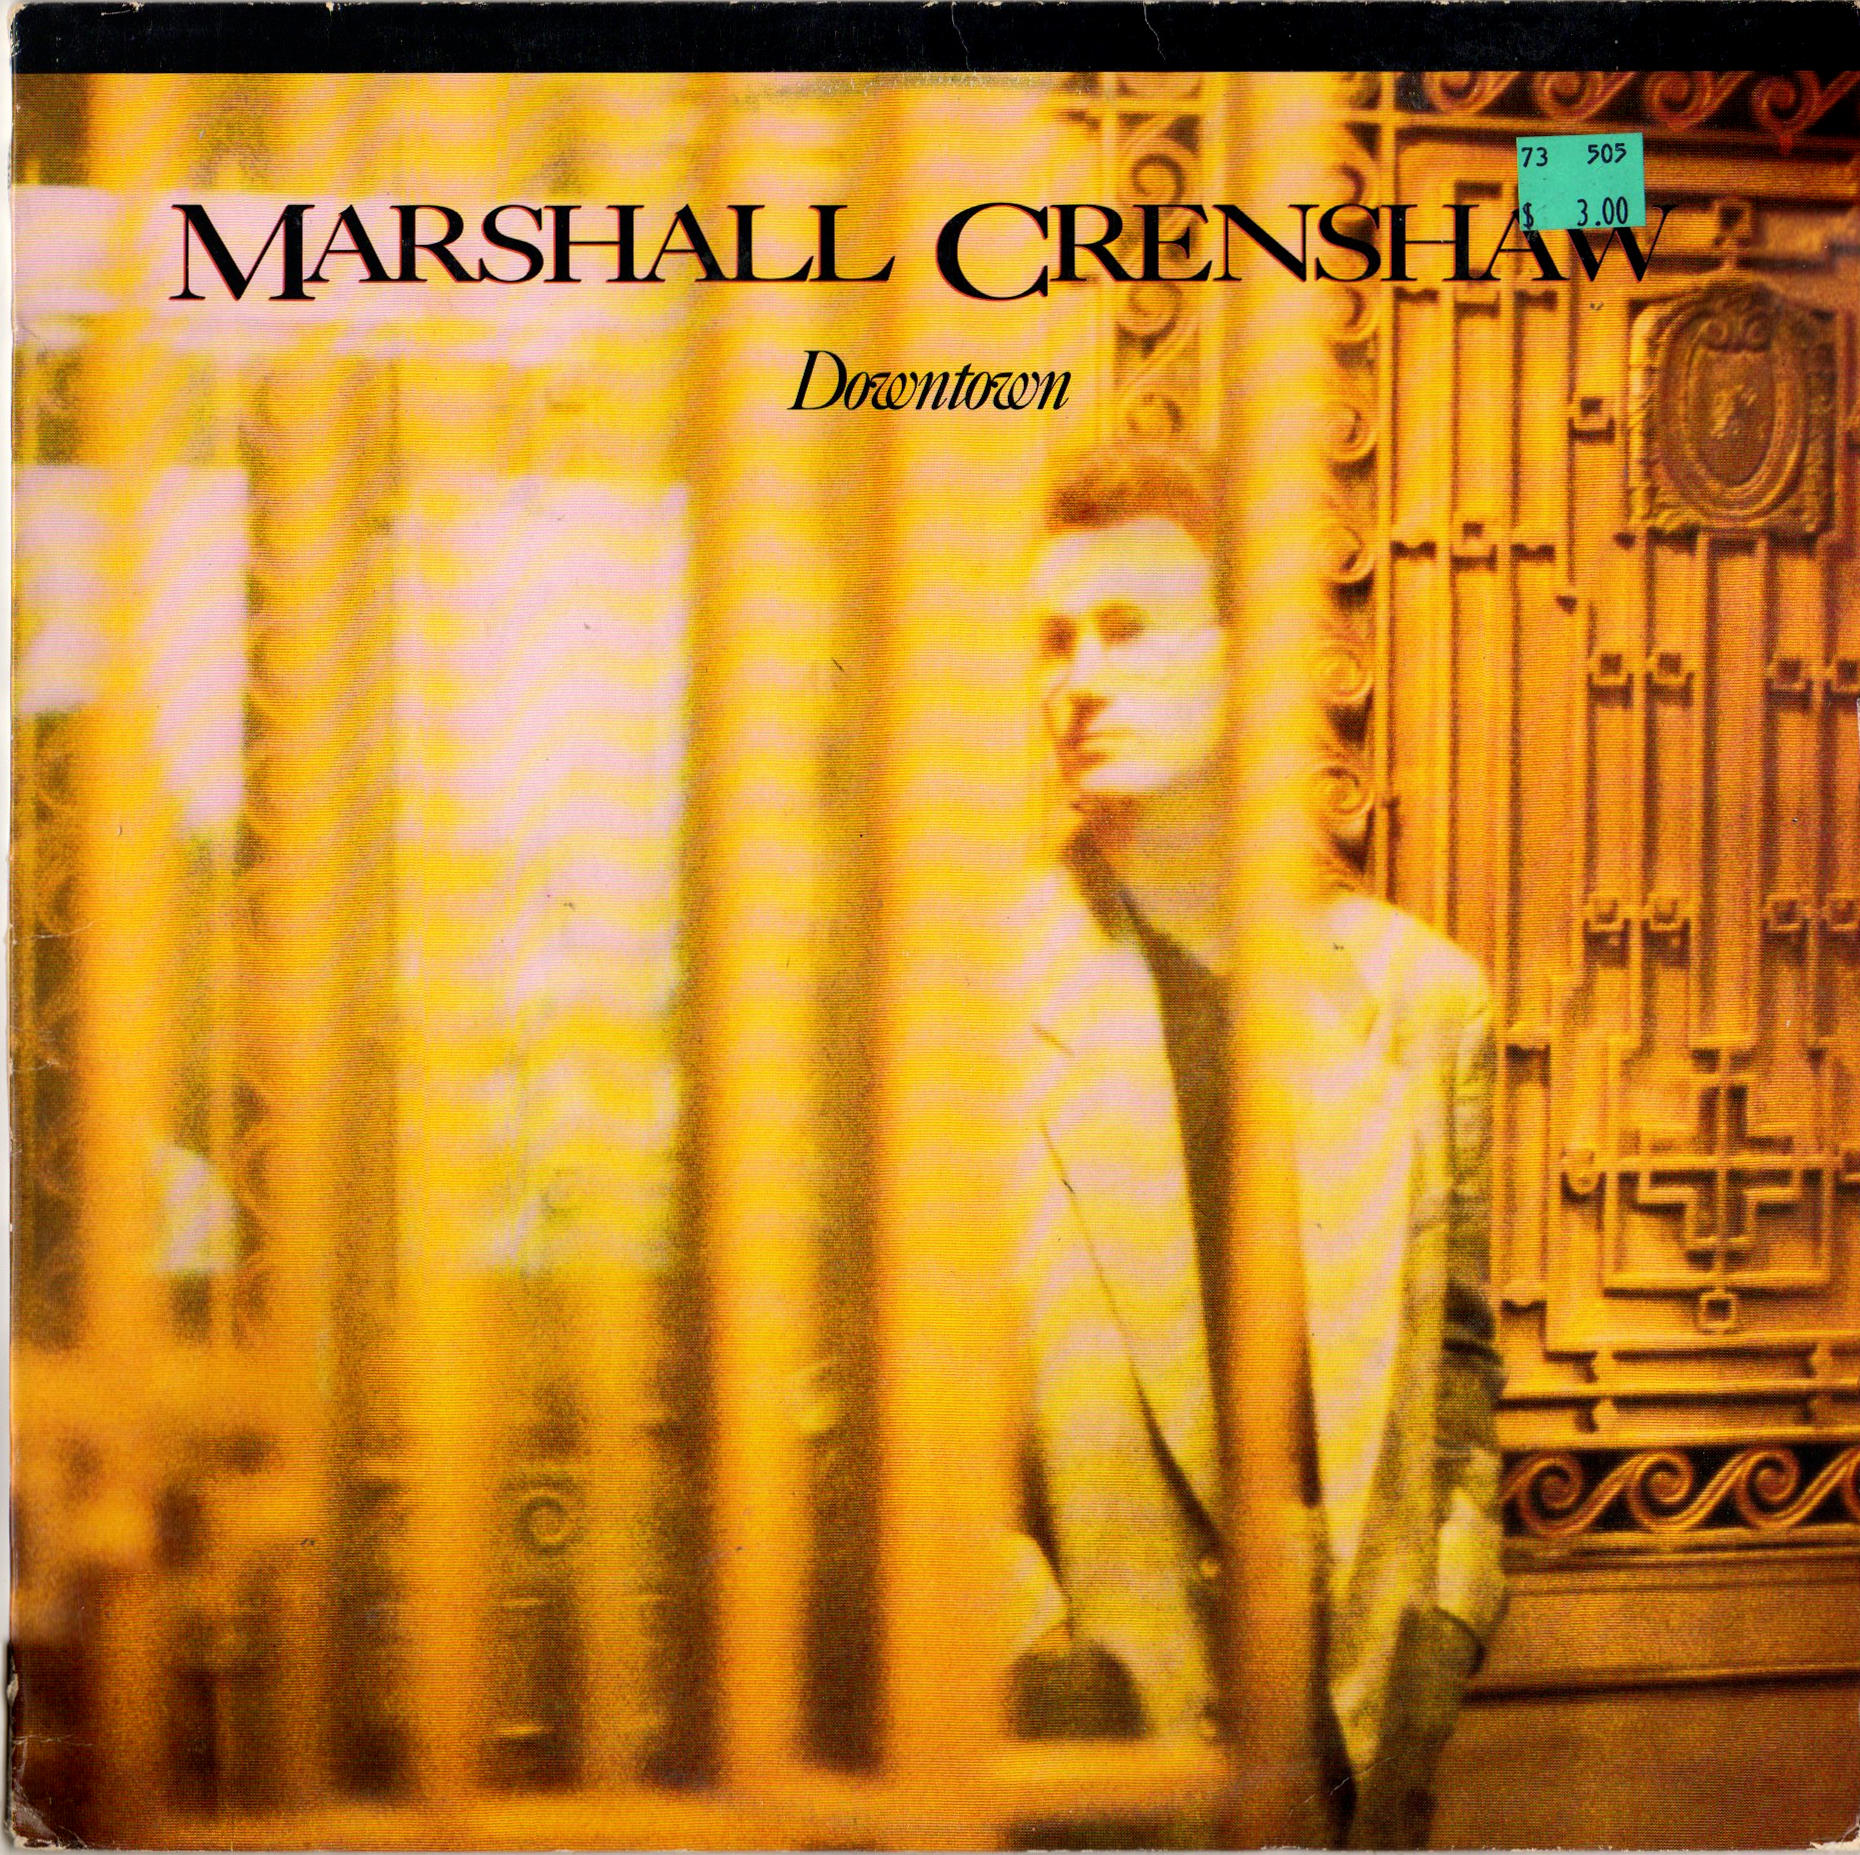 Marshall Crenshaw Downtown Warner Bros LP